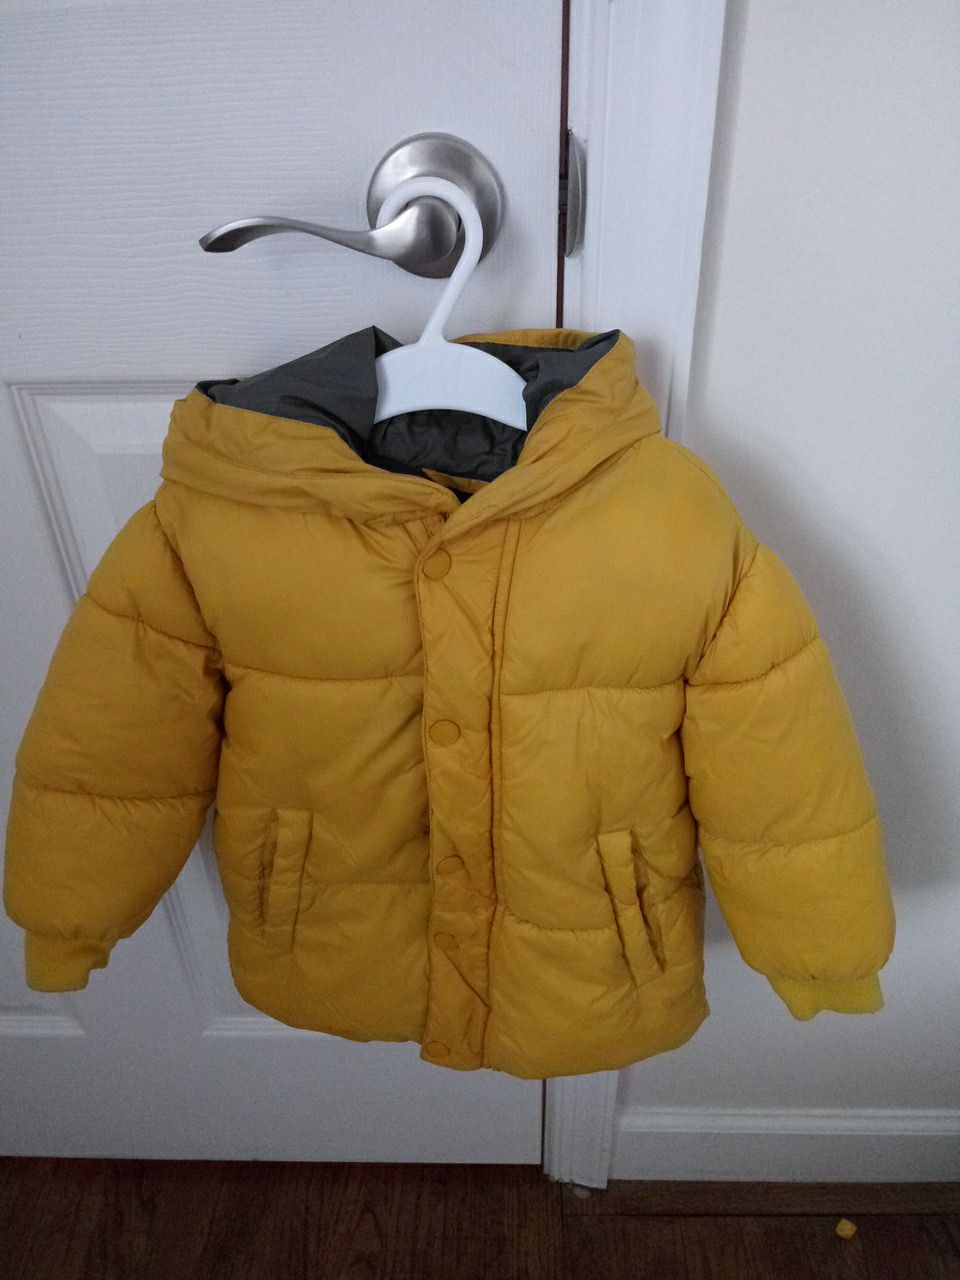 Zara baby boy jacket